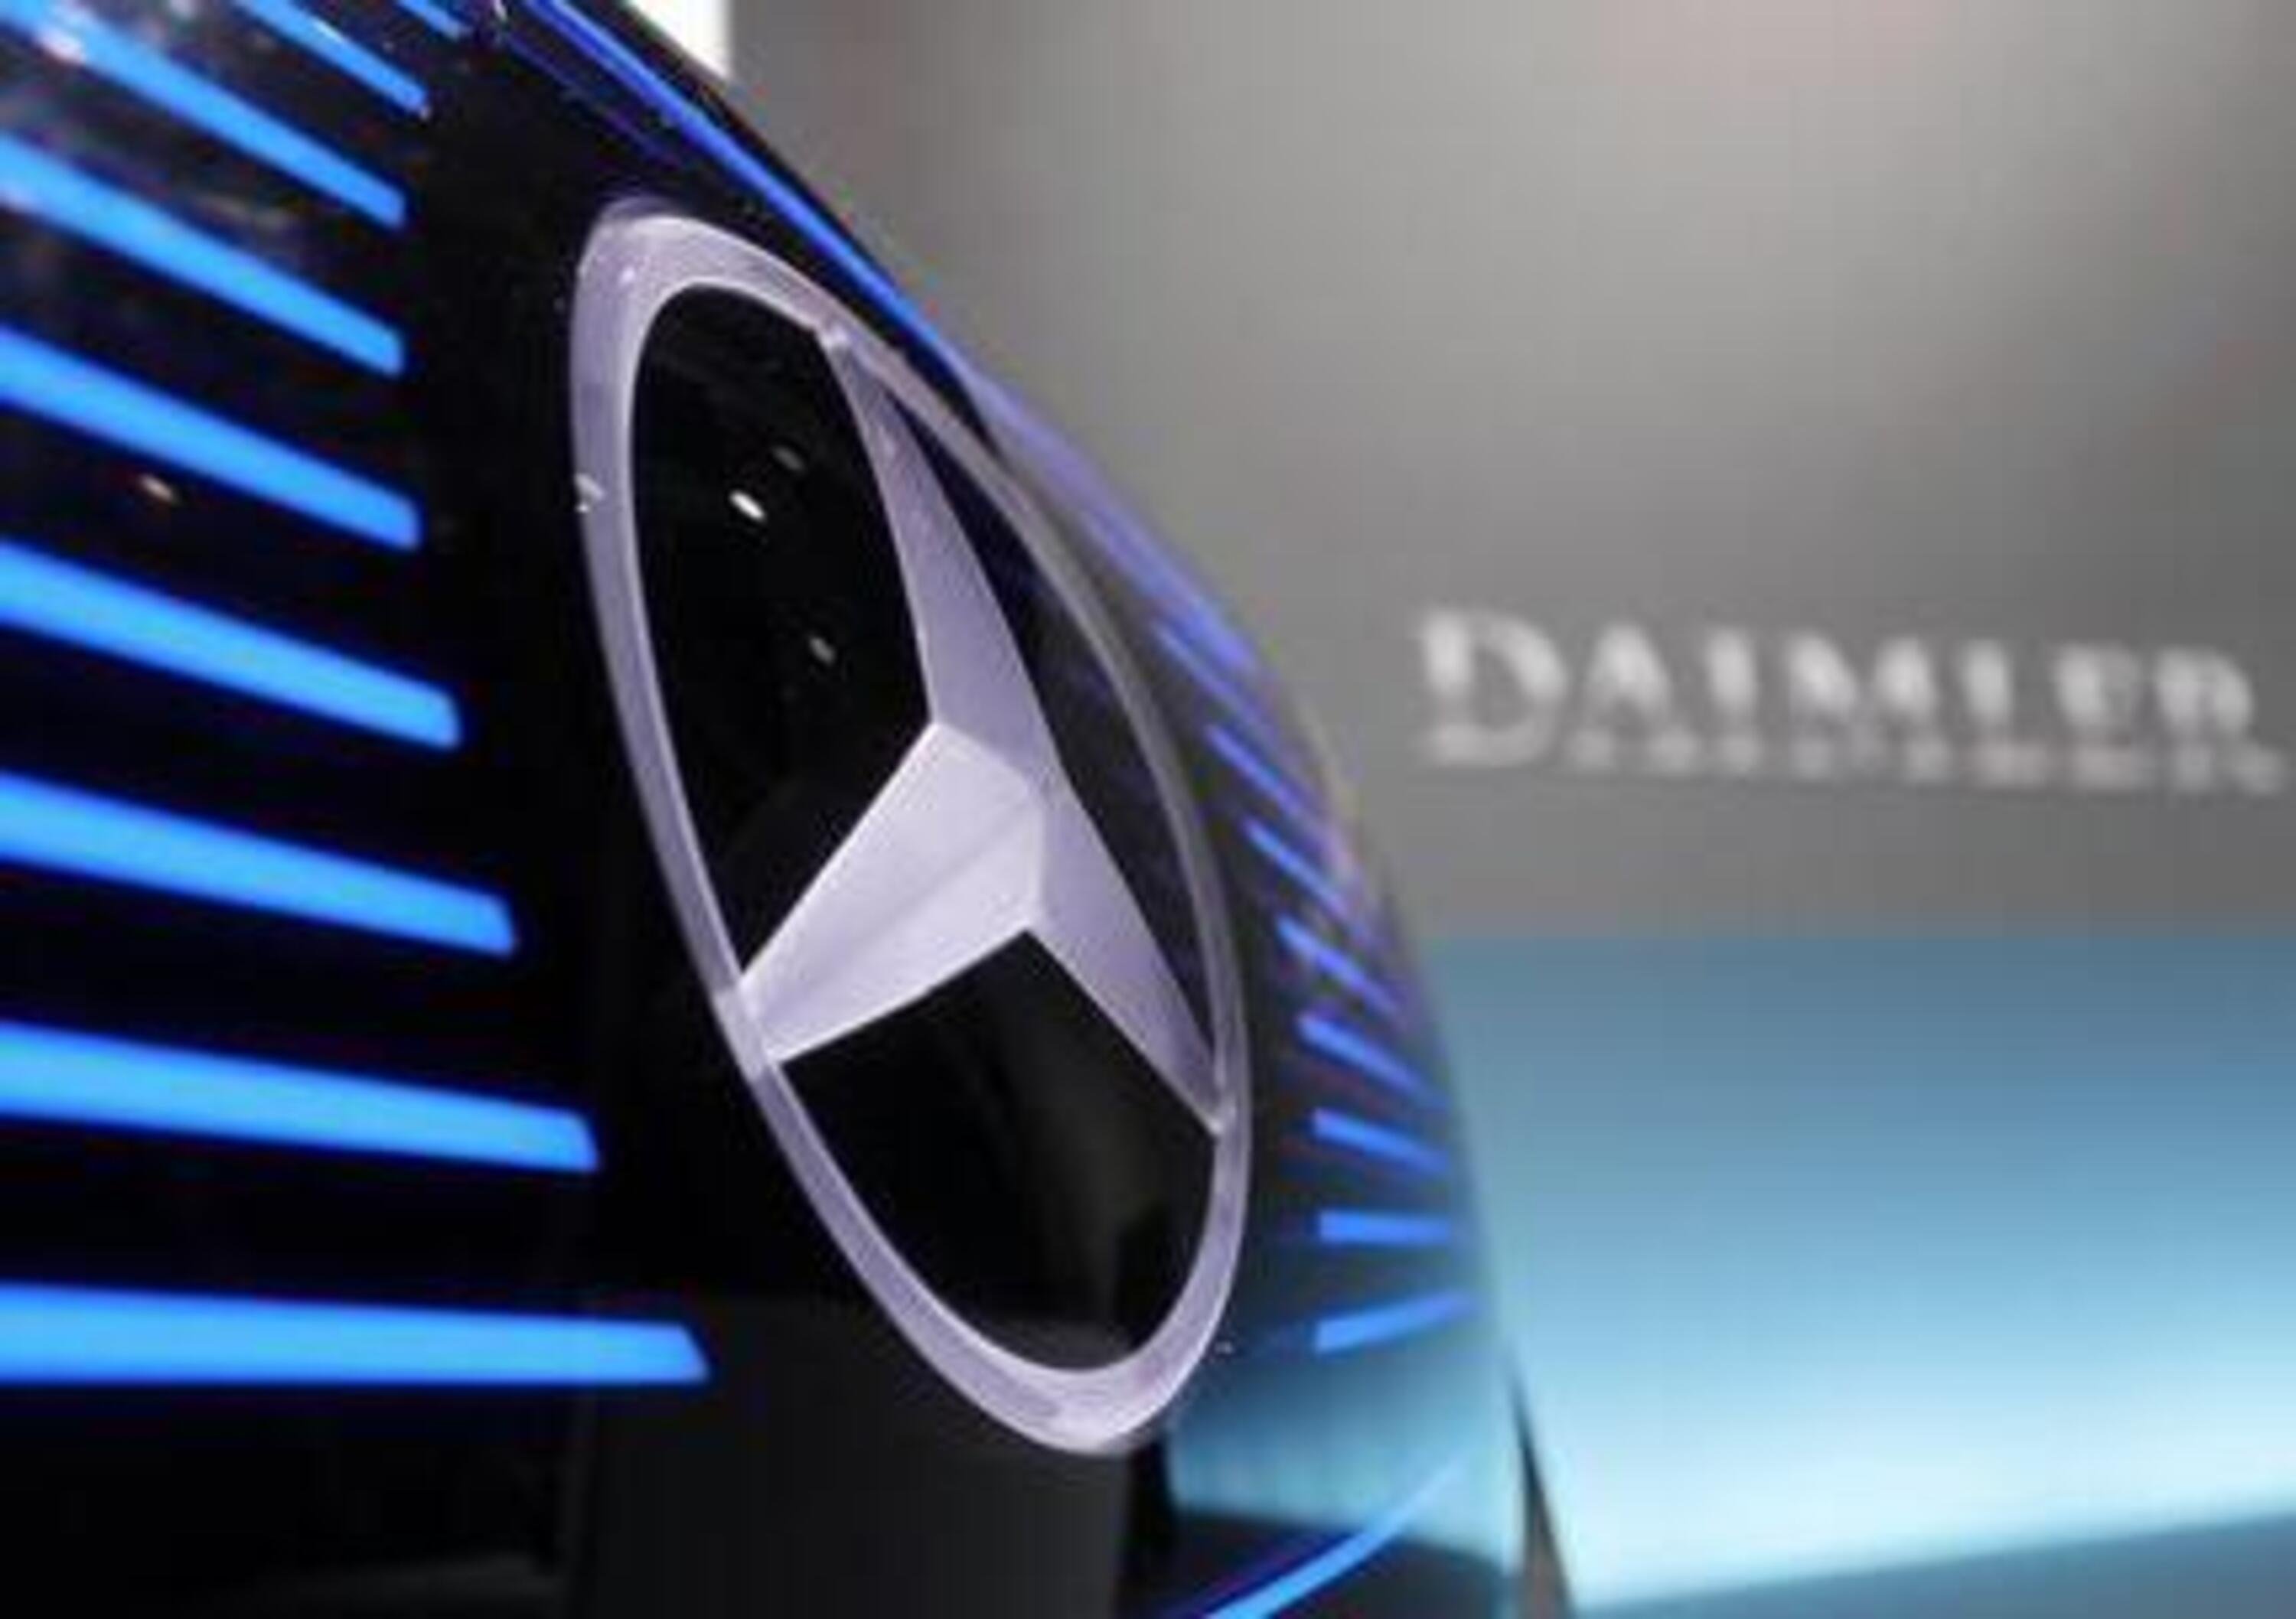 Emissioni diesel: Daimler, software illegali su alcuni motori?